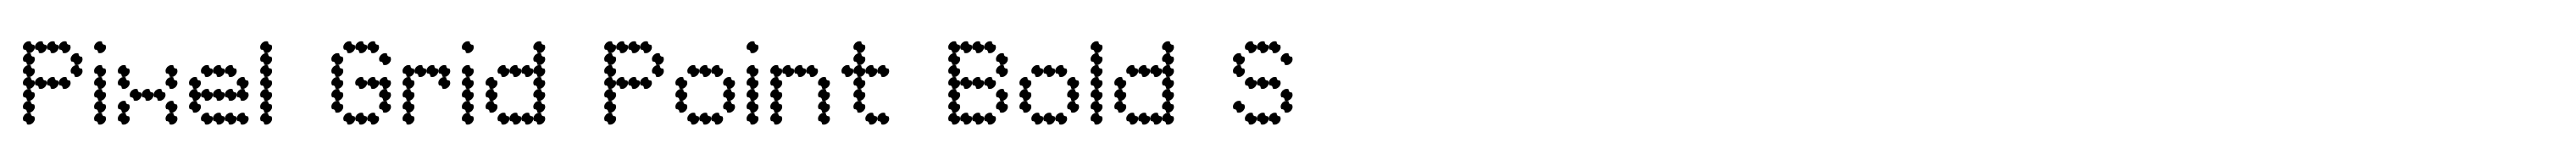 Pixel Grid Point Bold S